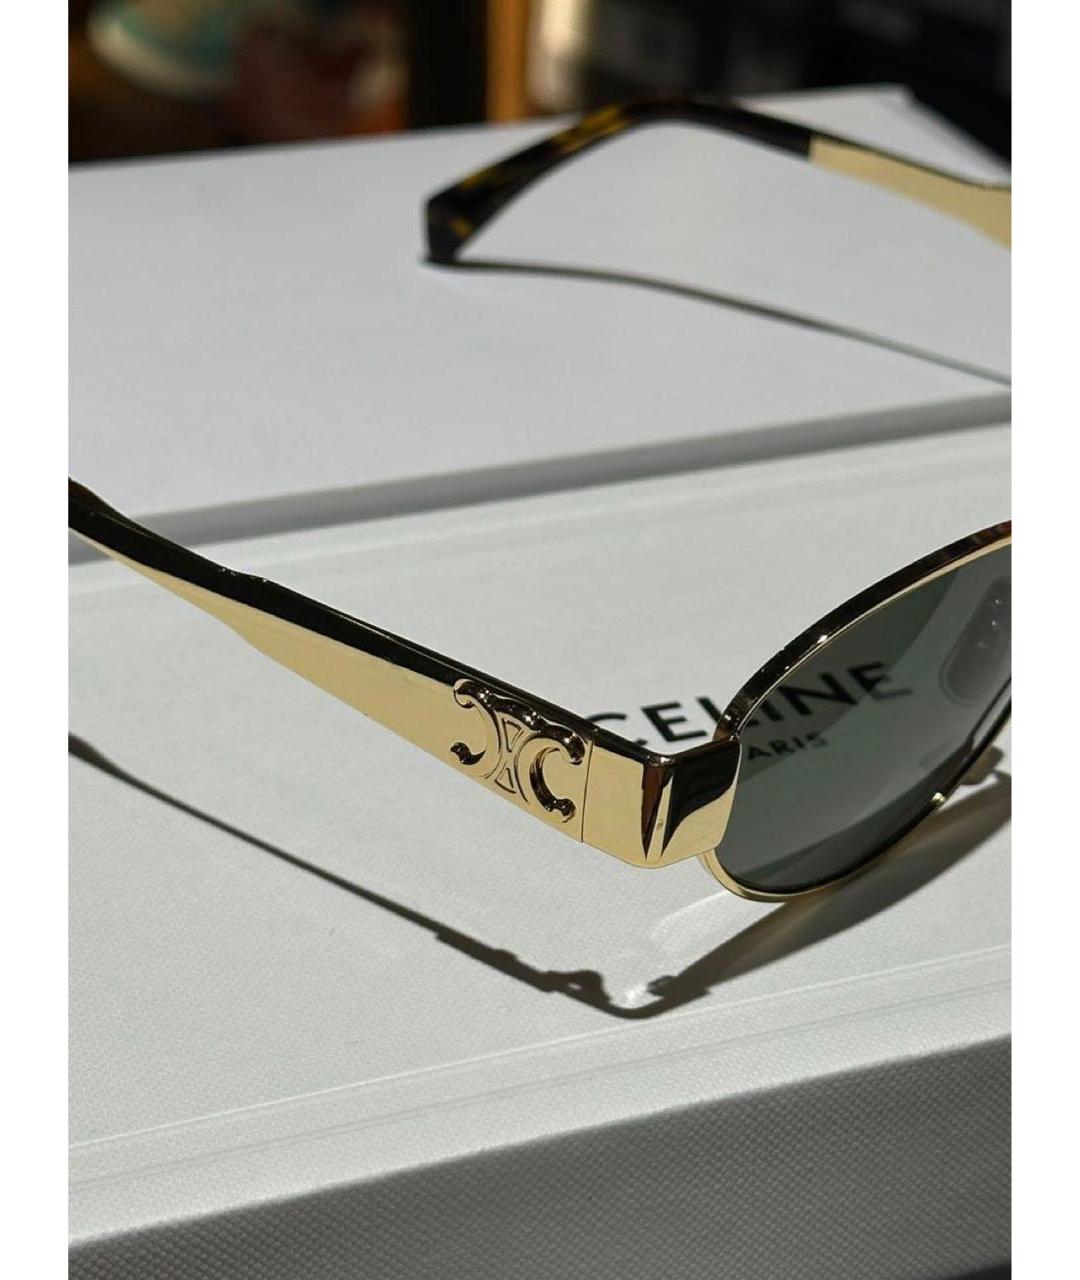 CELINE PRE-OWNED Золотые металлические солнцезащитные очки, фото 2